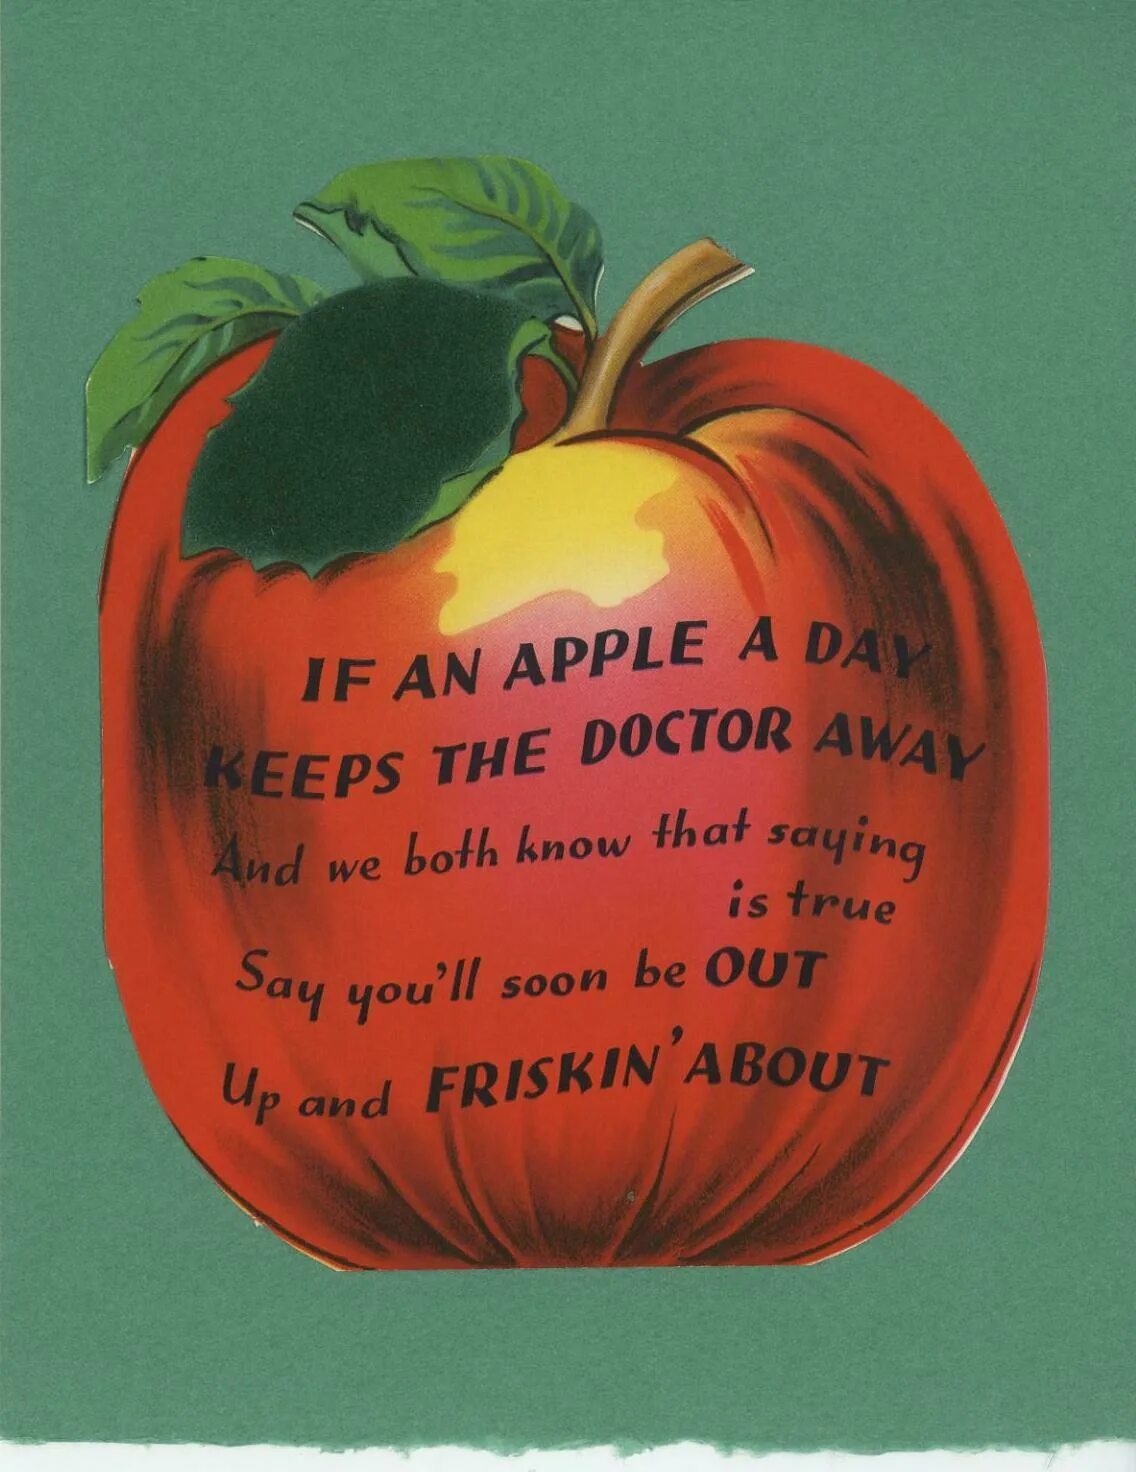 An apple a day keeps the away. An Apple a Day keeps the Doctor away. An Apple a Day keeps. One Apple a Day keeps Doctors away. An Apple a Day keeps the Doctor away идиома.